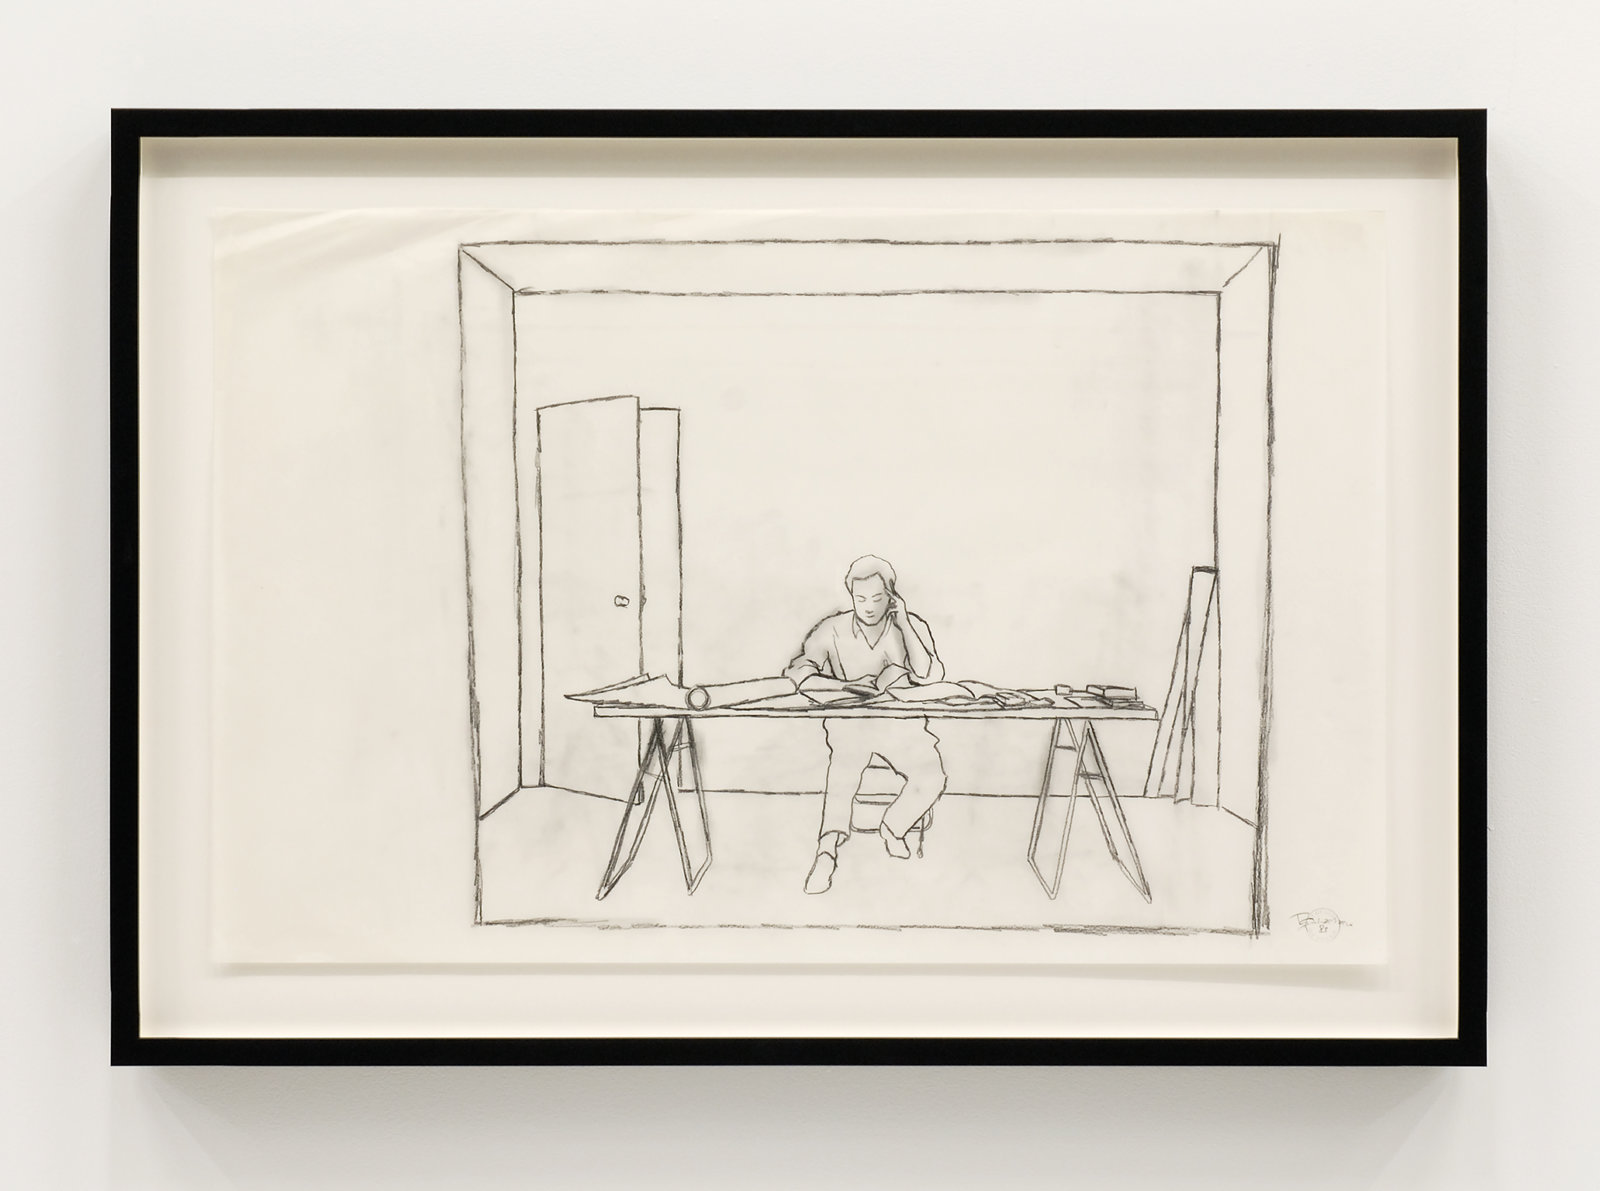 Ian Wallace, At Work 1983, 1983, pencil on mylar, 22 x 34 in. (56 x 86 cm)